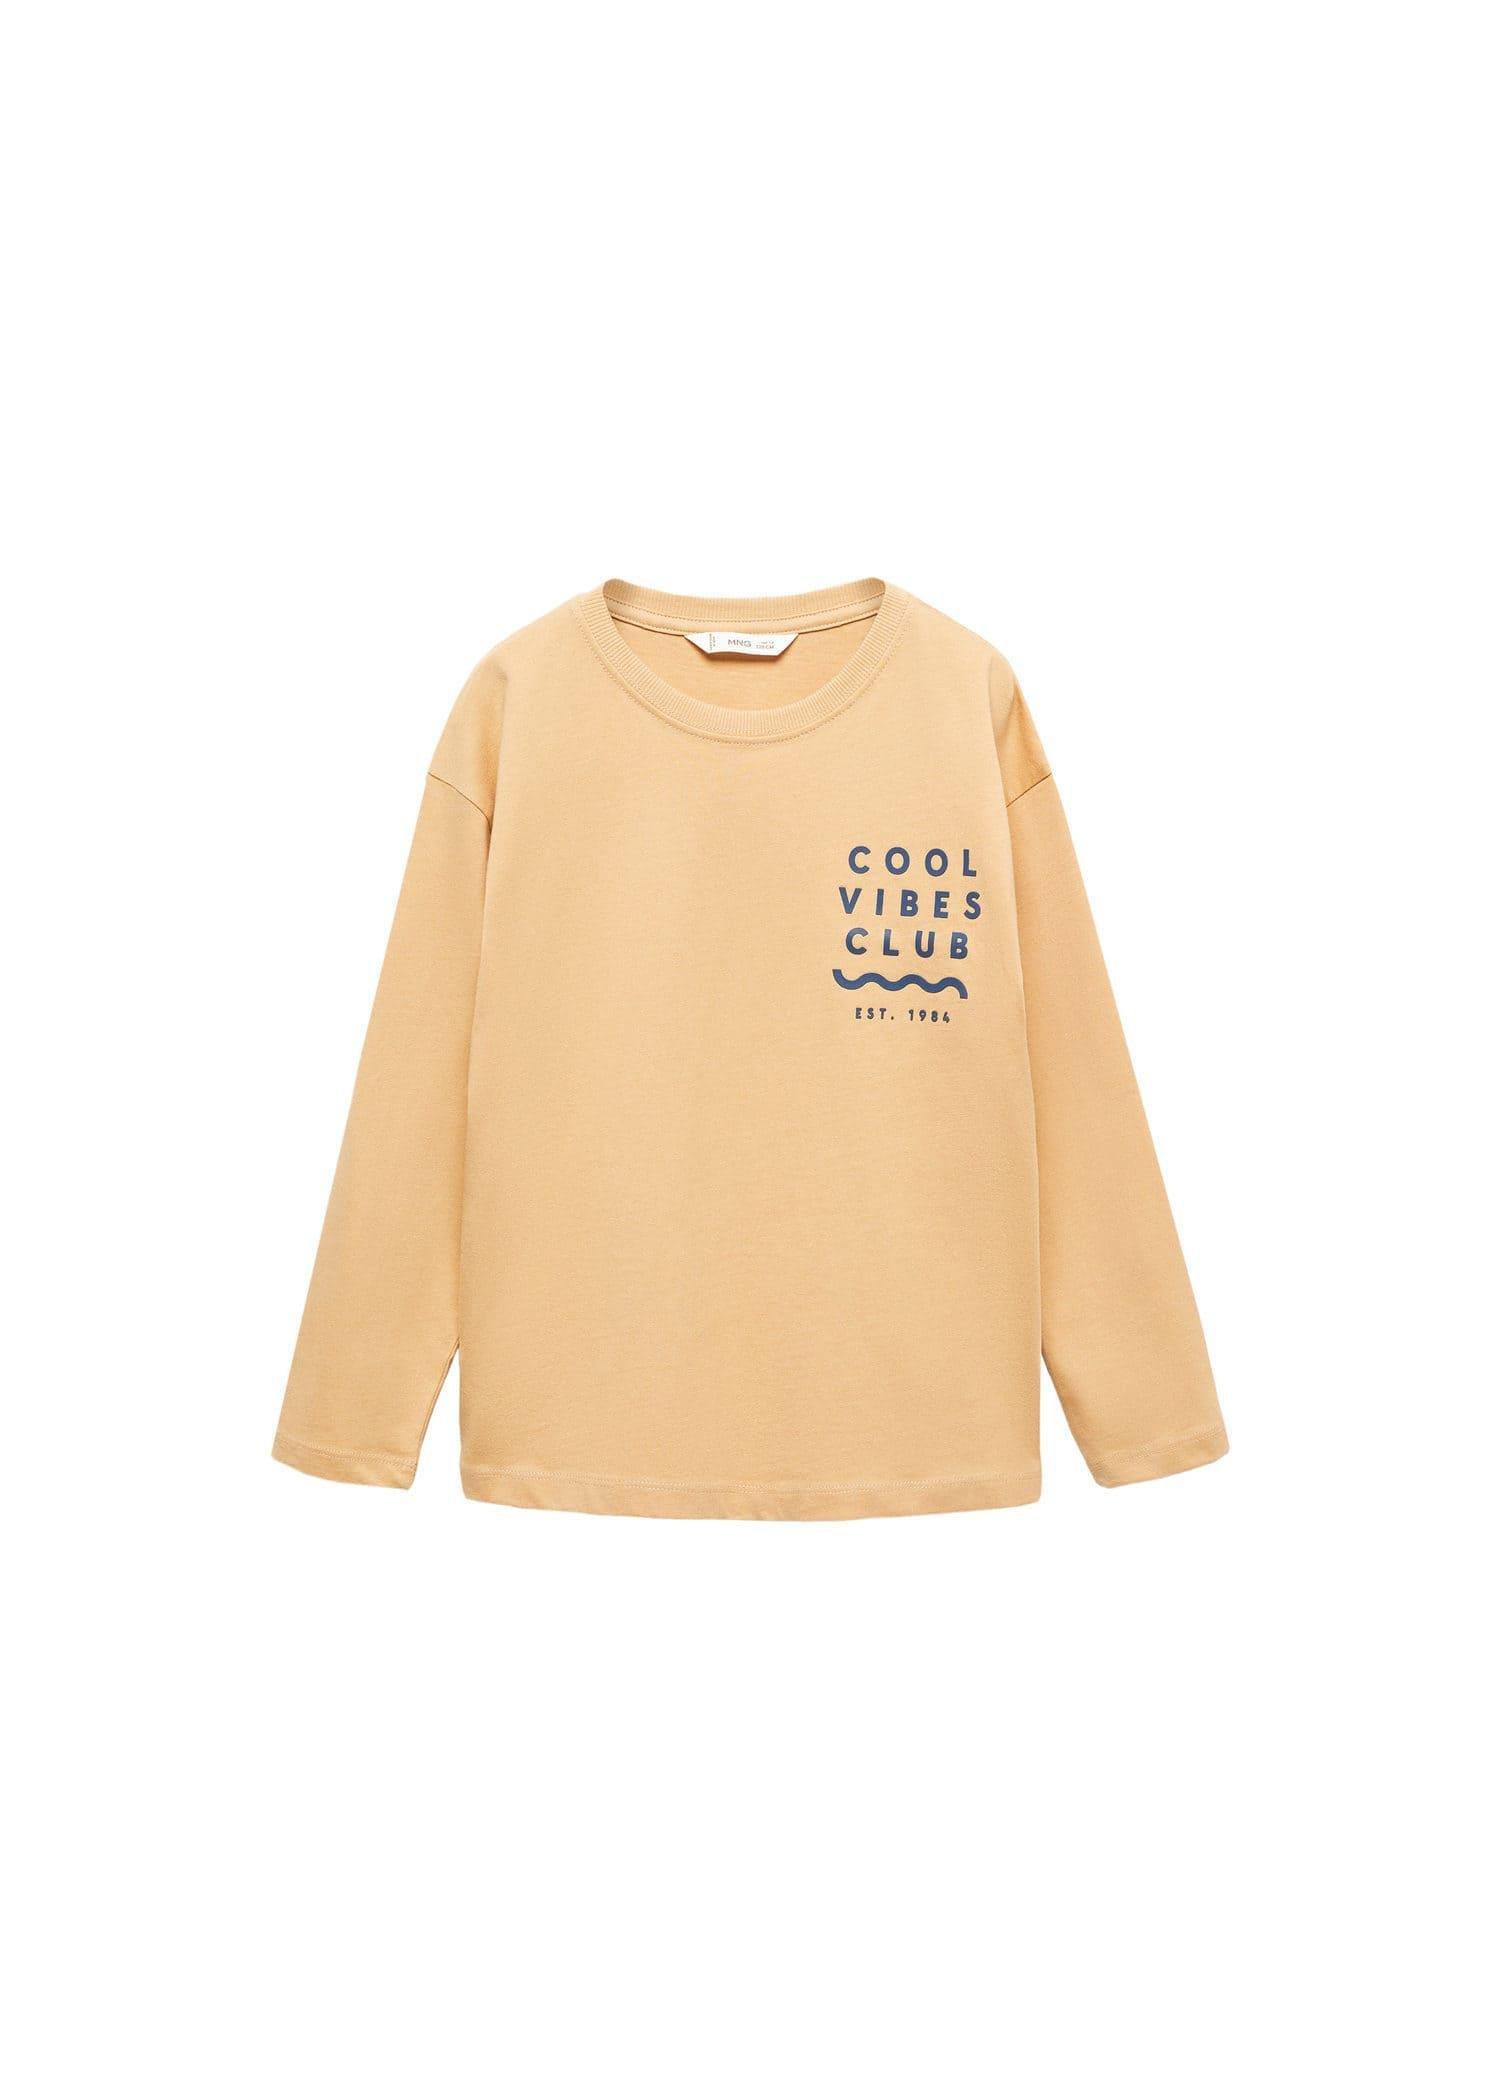 Mango - Yellow Long-Sleeved T-Shirt, Kids Boys